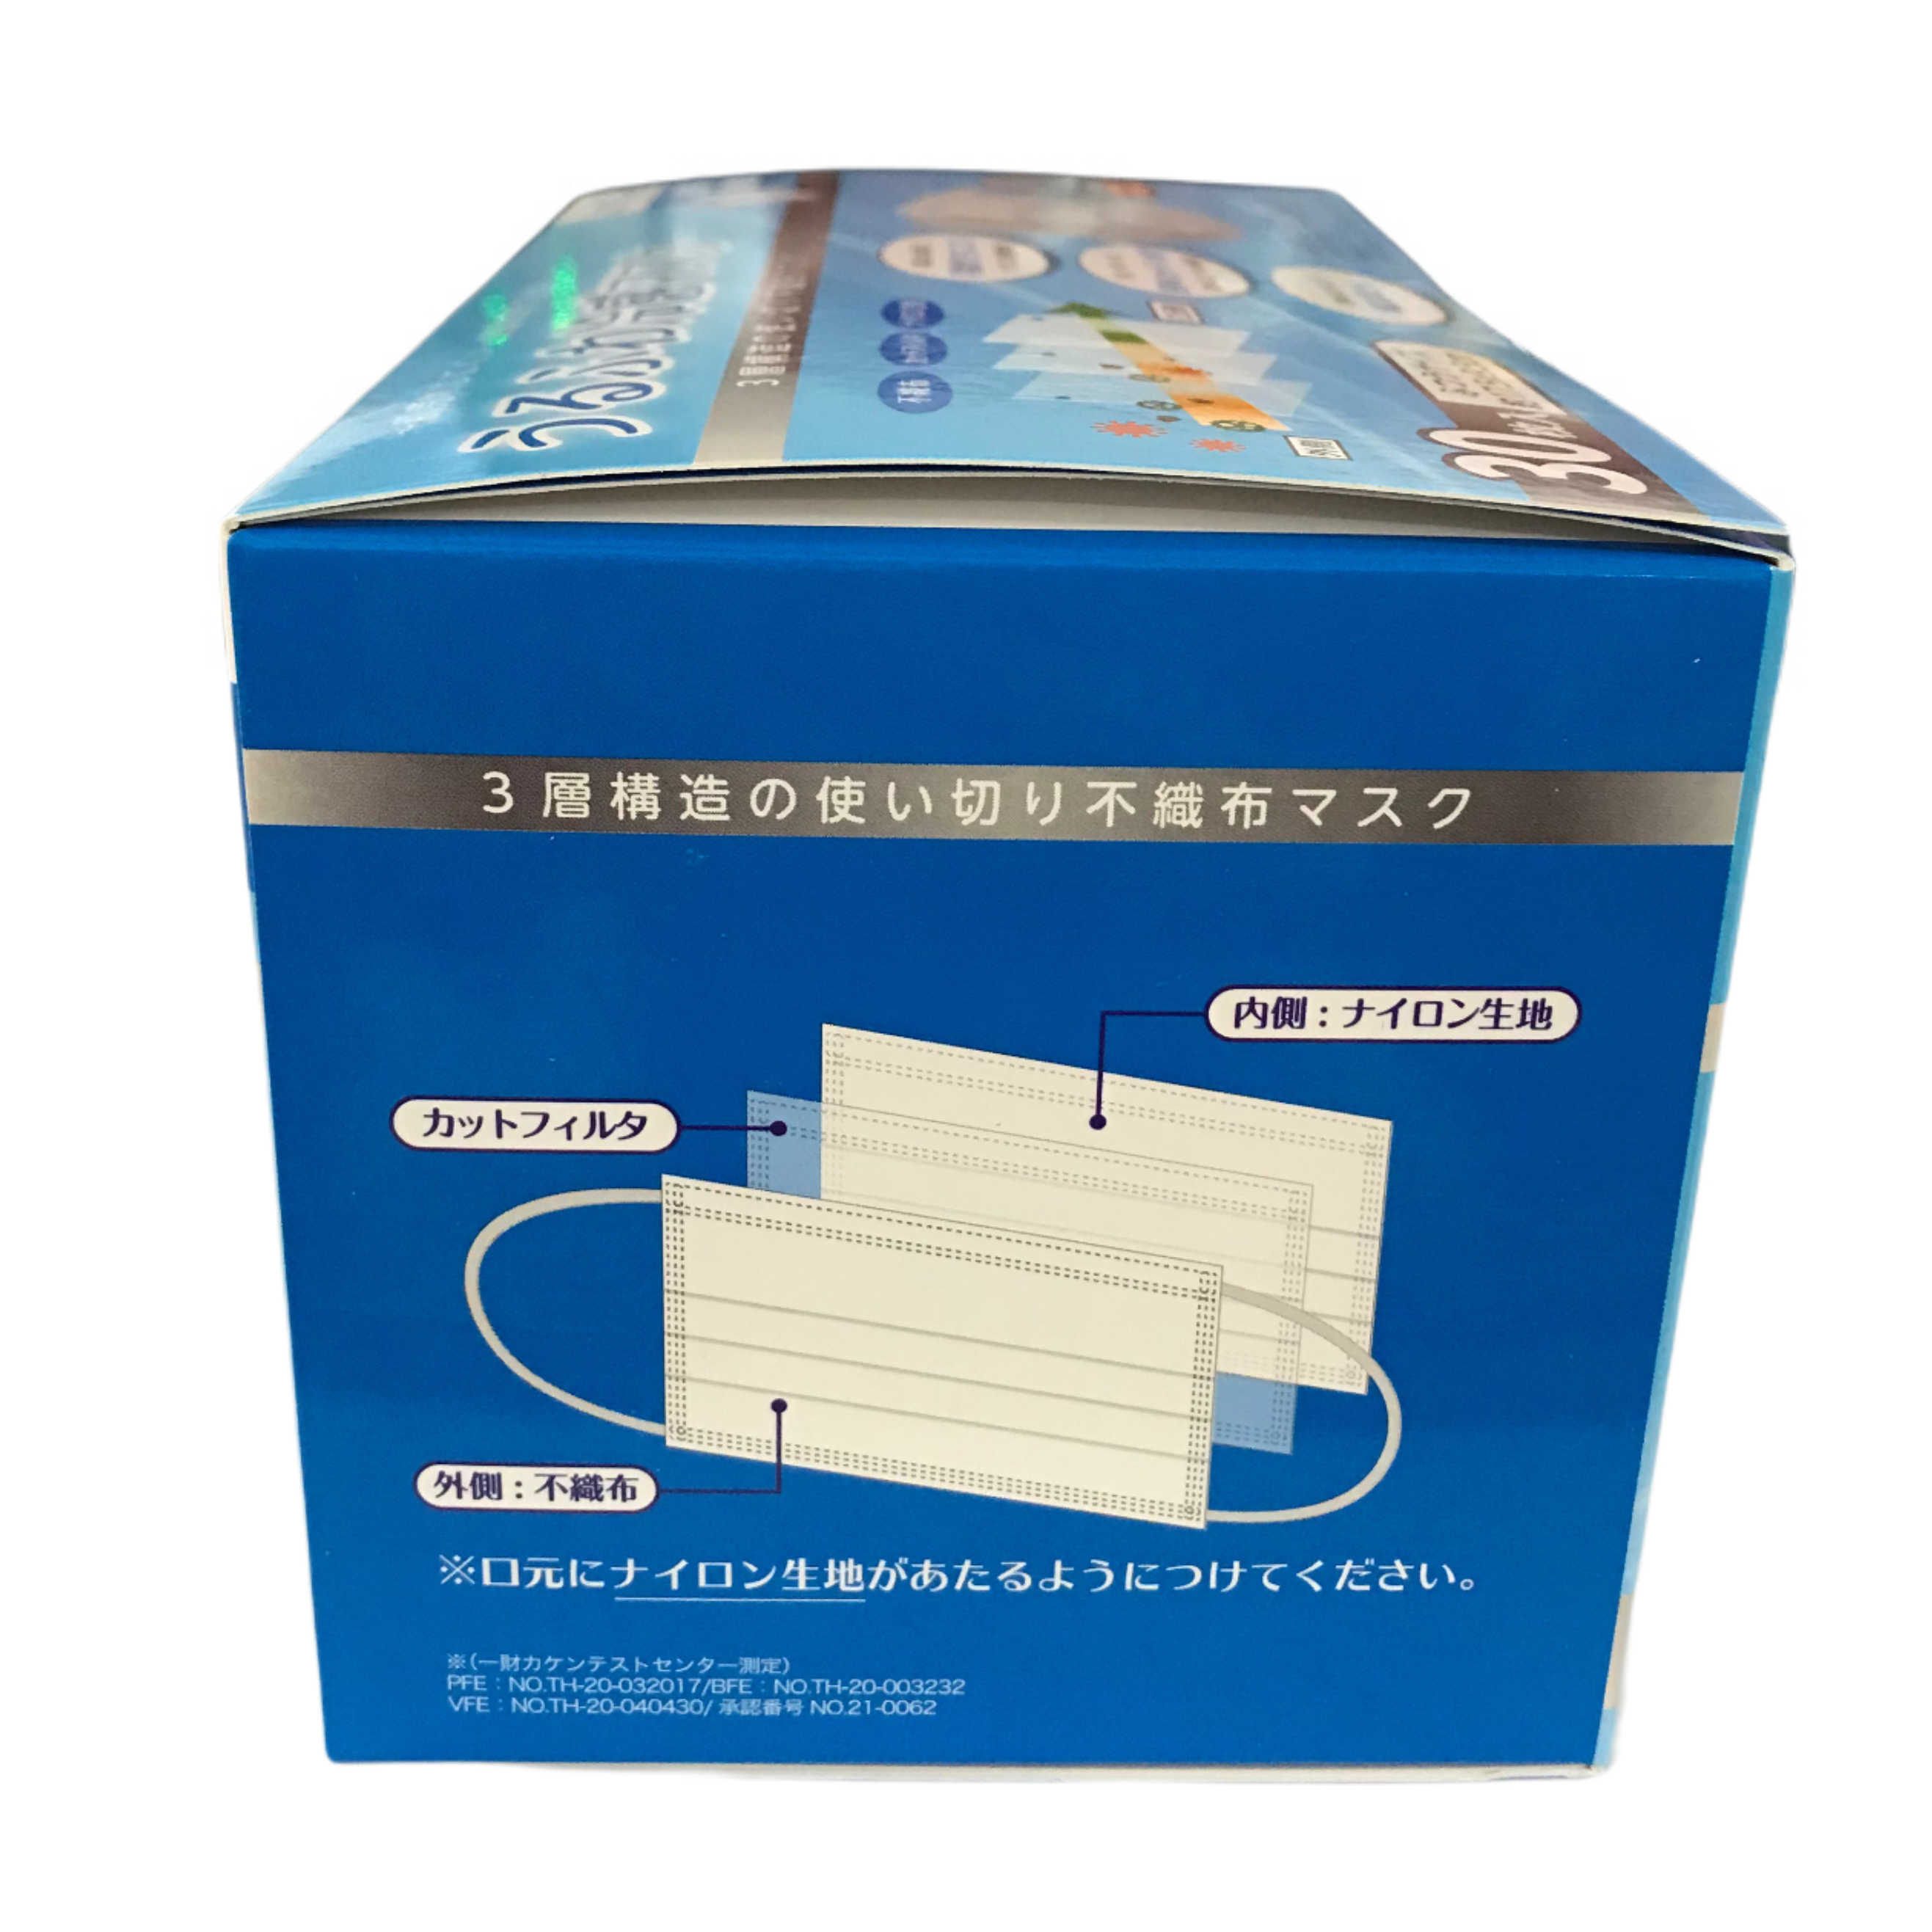 Feeling Cold Mask 3層構造うるふわ冷感マスク 30枚セット 非医療用 - Skyart JAPAN